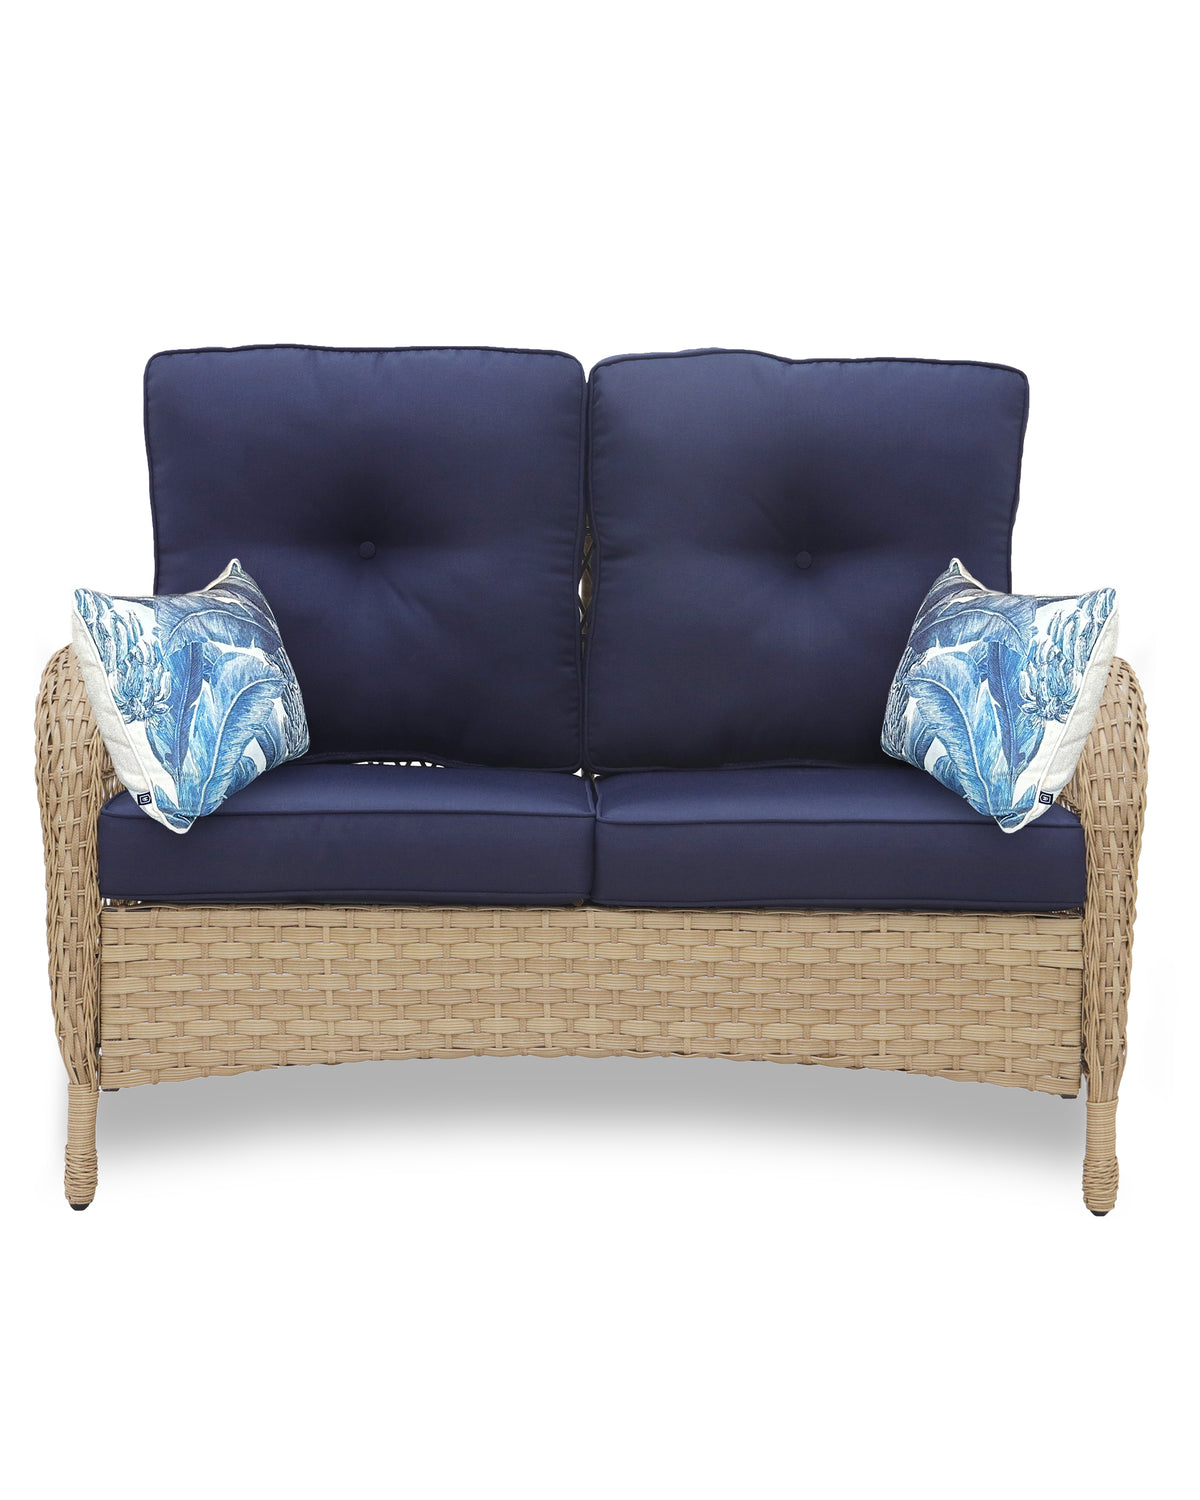 Harlie & Stone Outdoor Love seat 2 Seat Couch Wicker Loveseat - Beige Cushion